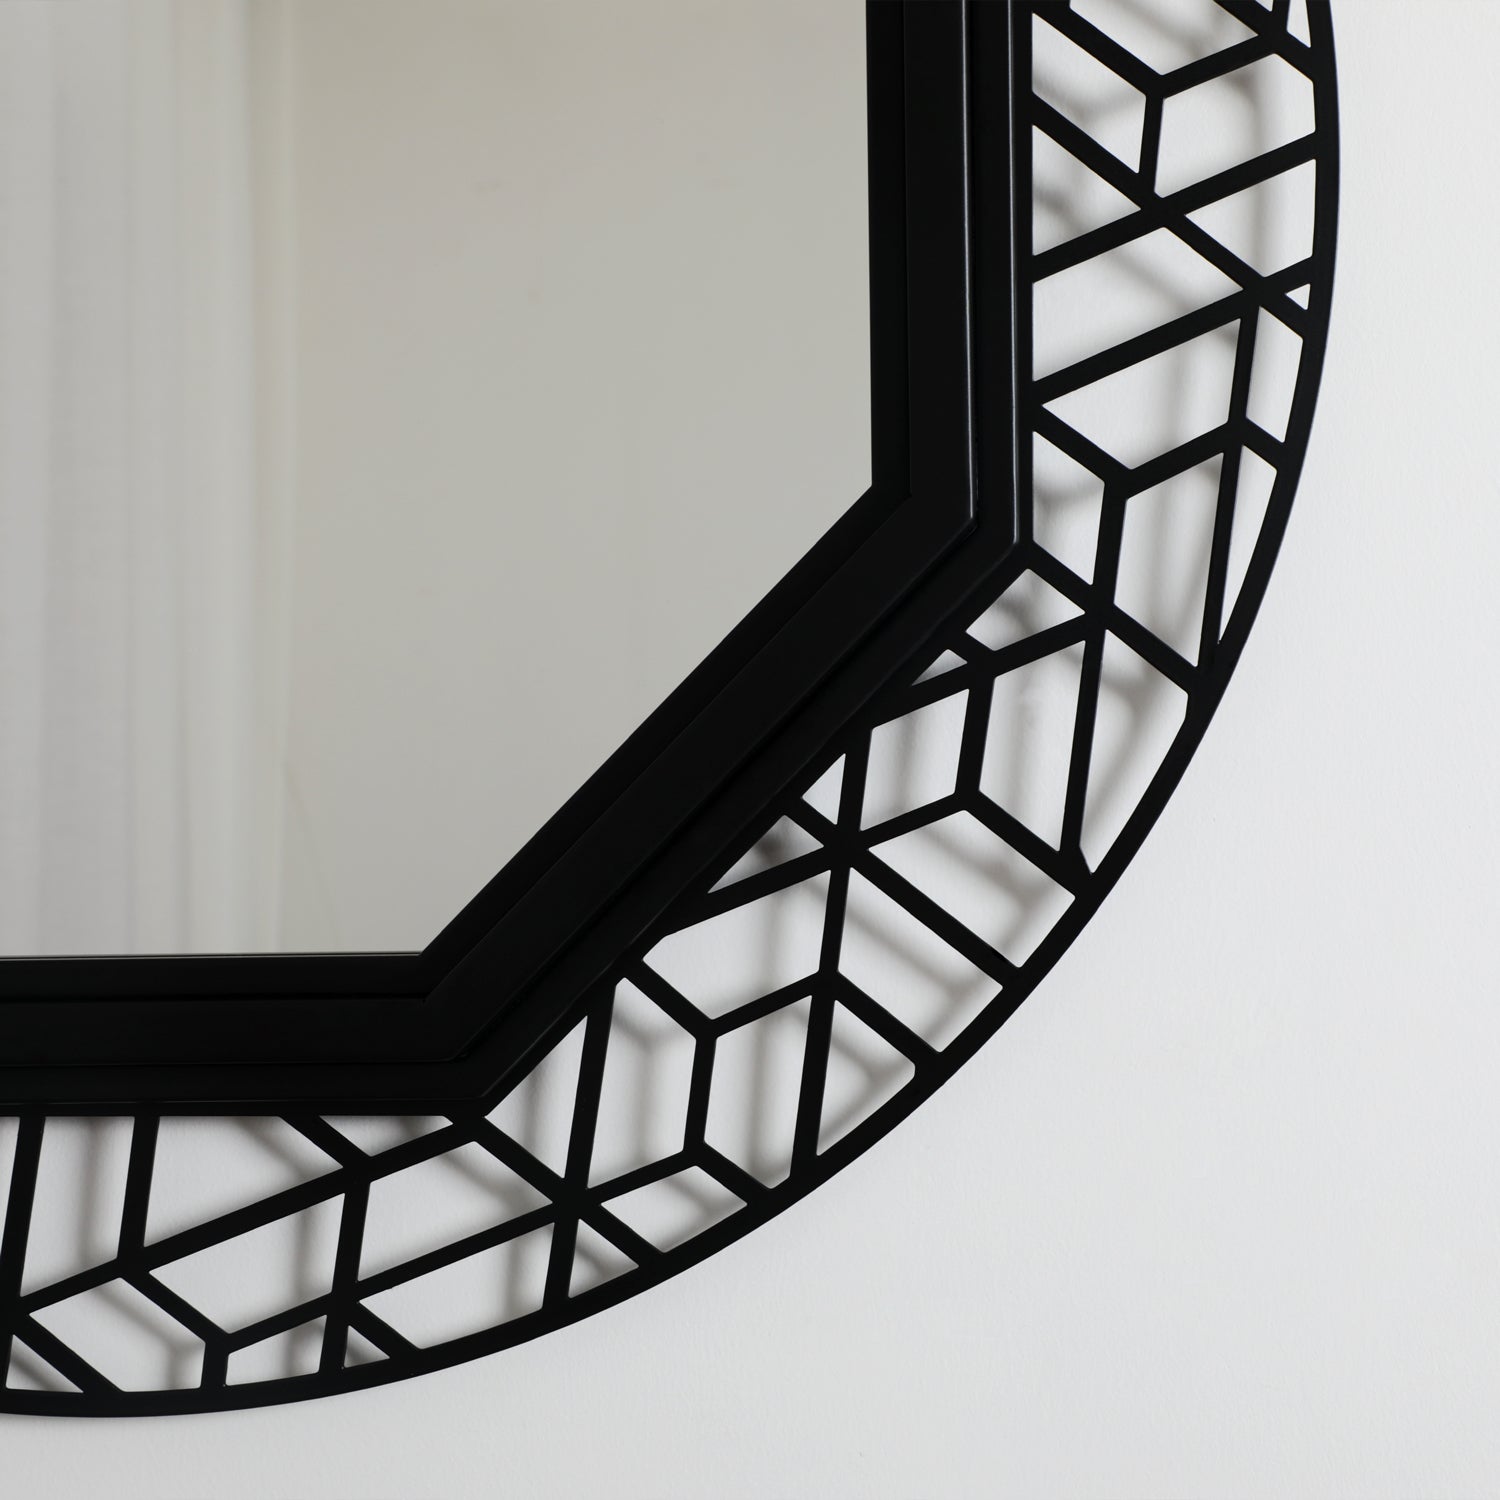 Black Decorative Mirror for Wall Decor, Octagonal Wall Mirror Decor with Metal Frame, 24"x24" Modern Bathroom Mirror for Bedroom Bathroom